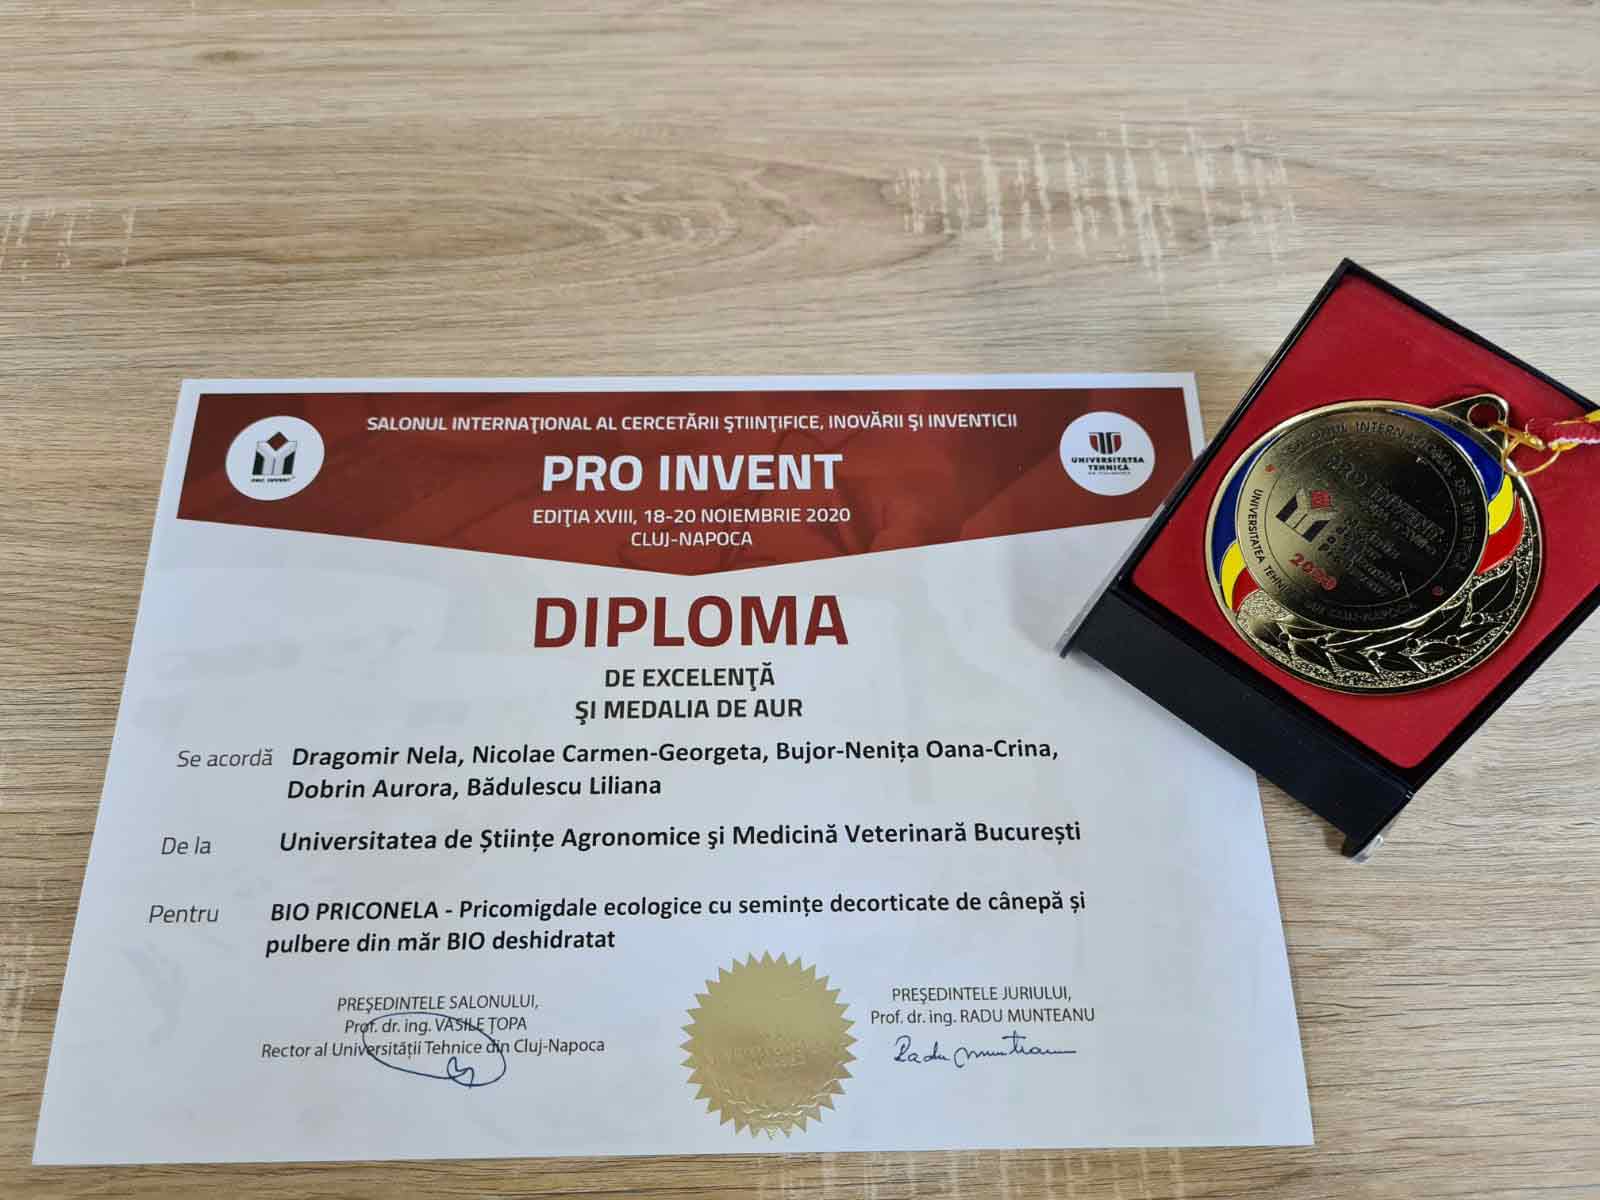 Diploma de excelenta si medalie de aur Pricomigdale BIO Priconela